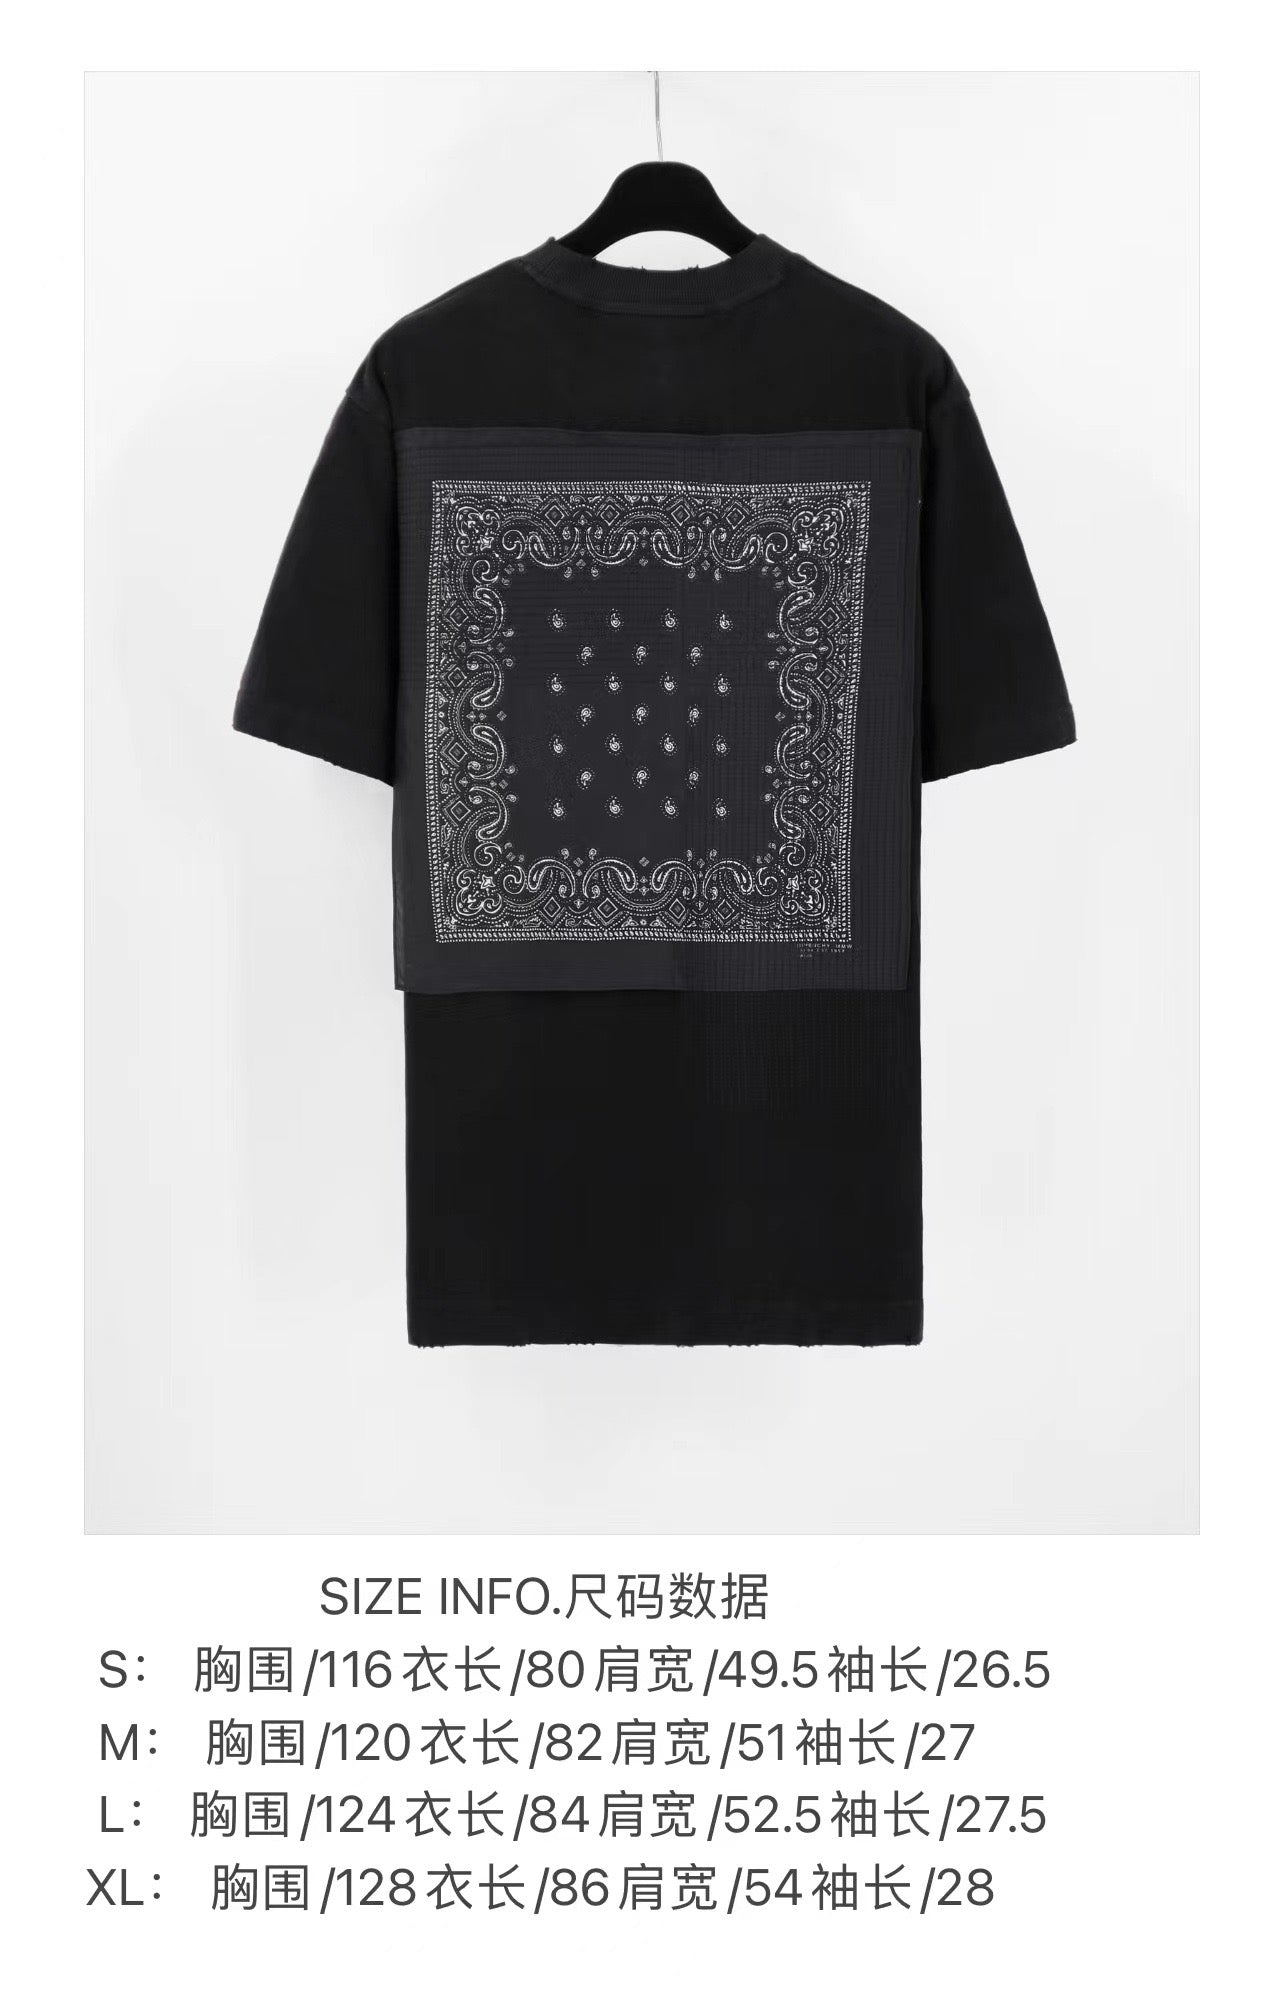 Black T-shirts